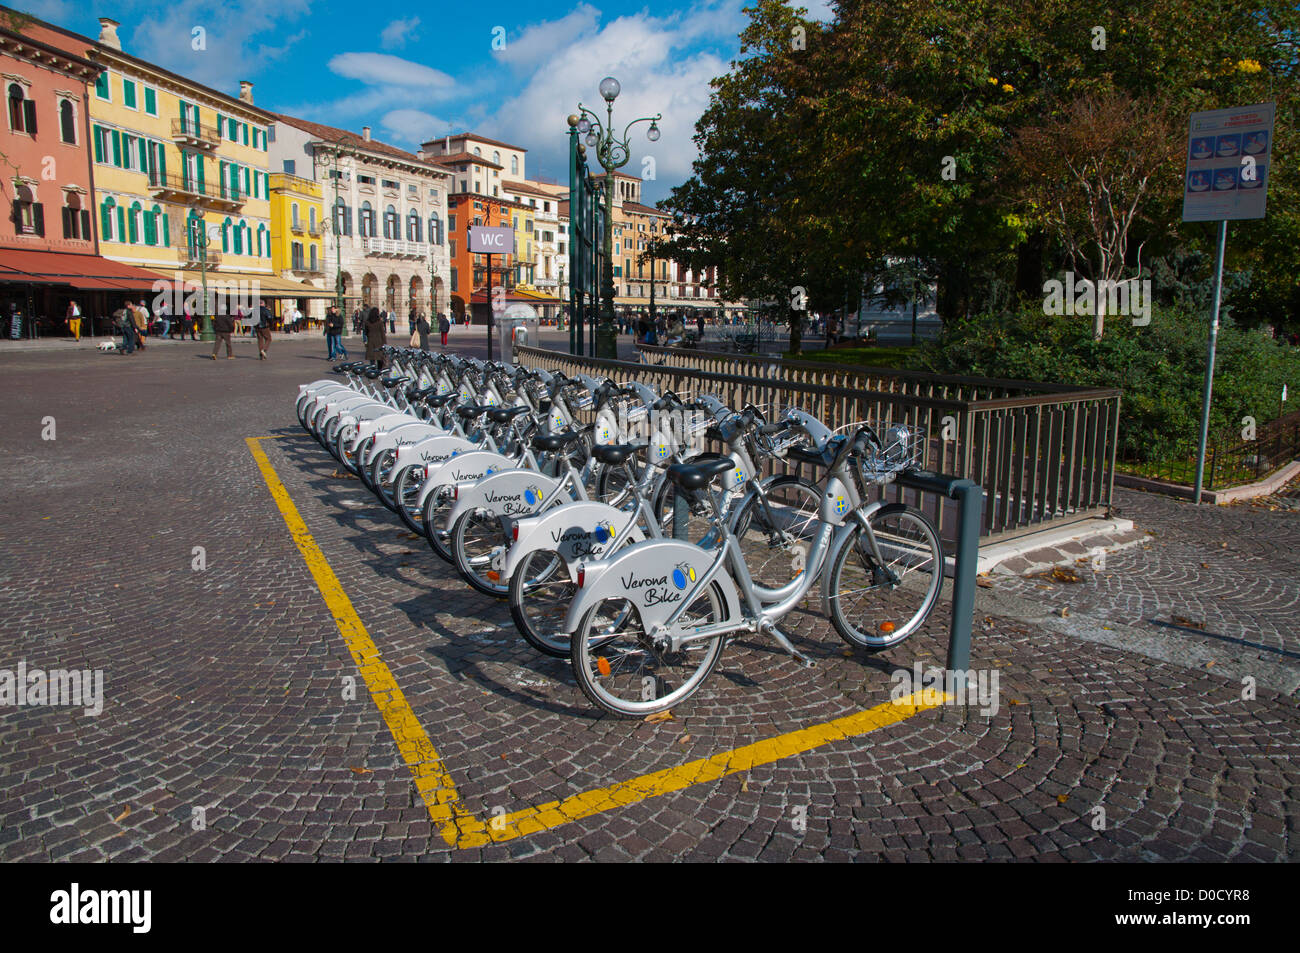 Verona bike cycling scheme bicycle stand Piazza Bra square central Verona city the Veneto region northern Italy Europe Stock Photo